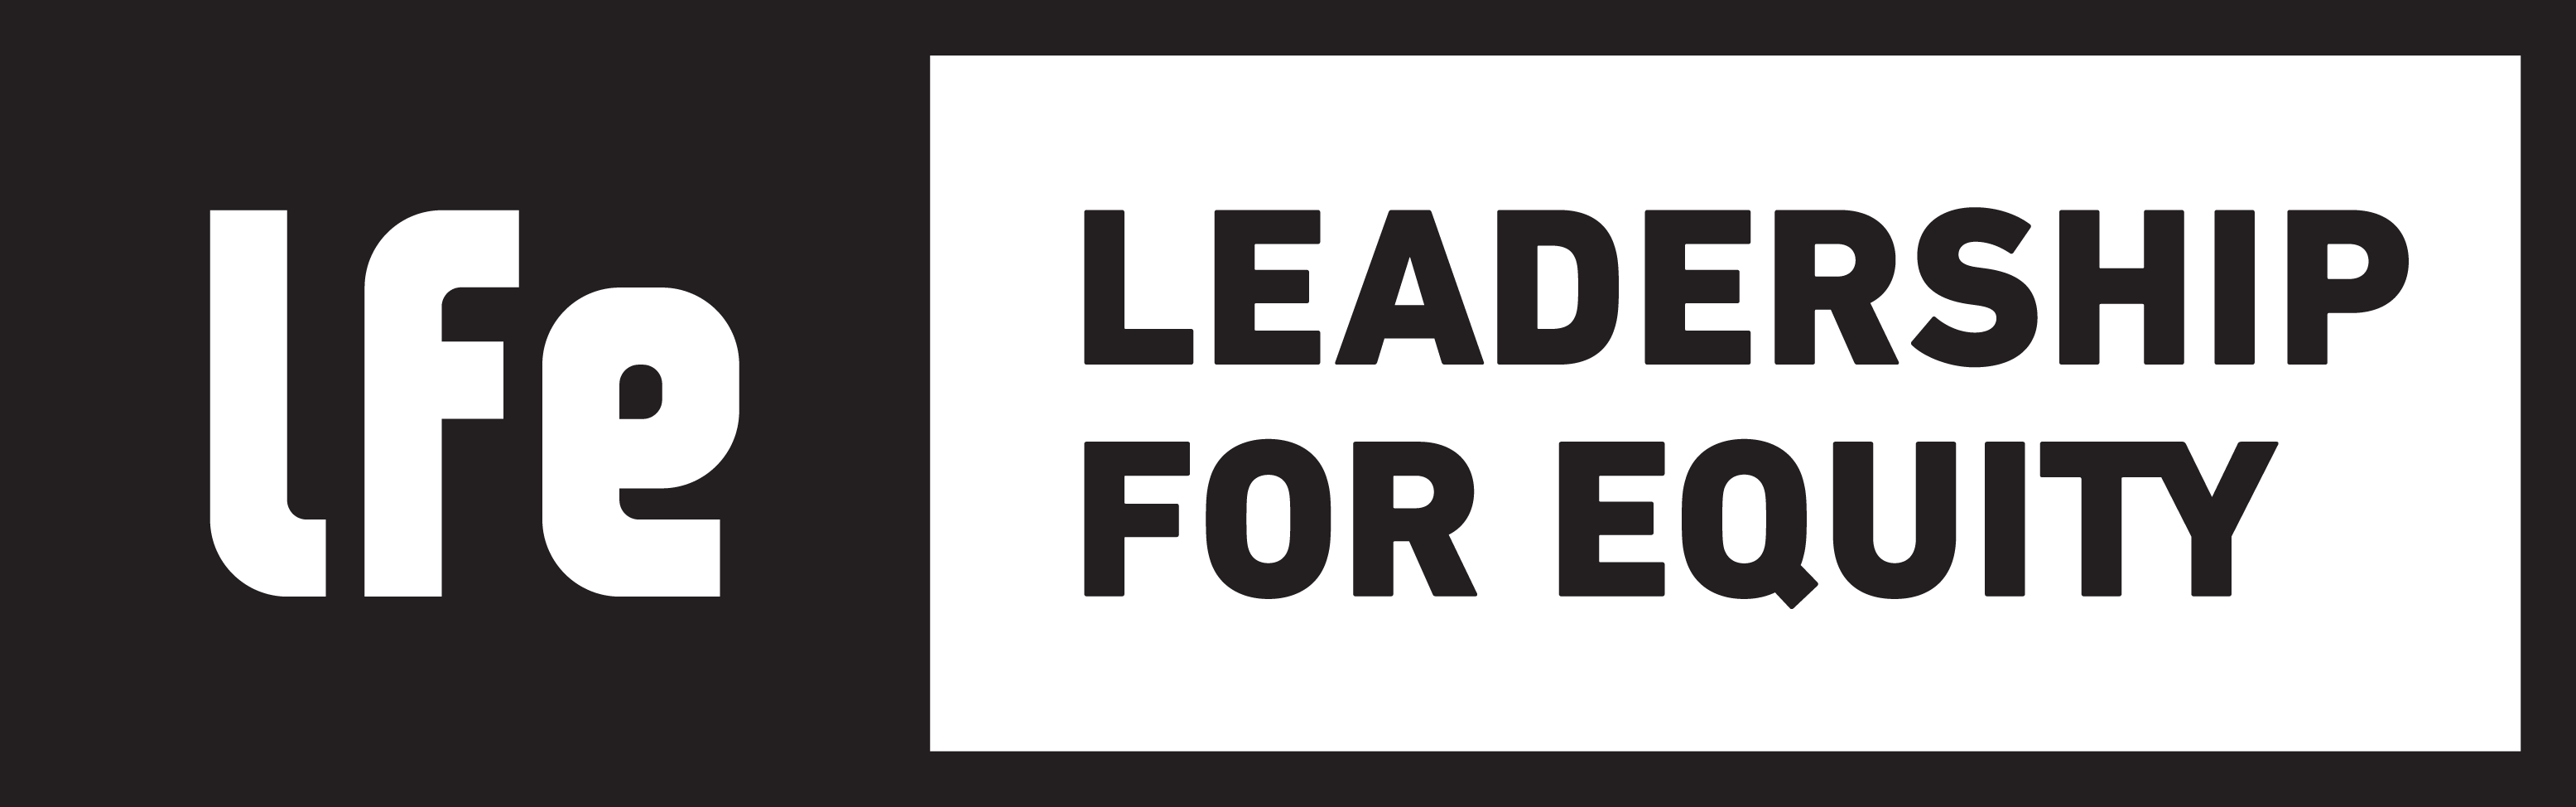 Leadership For Skilled Education Foundation logo